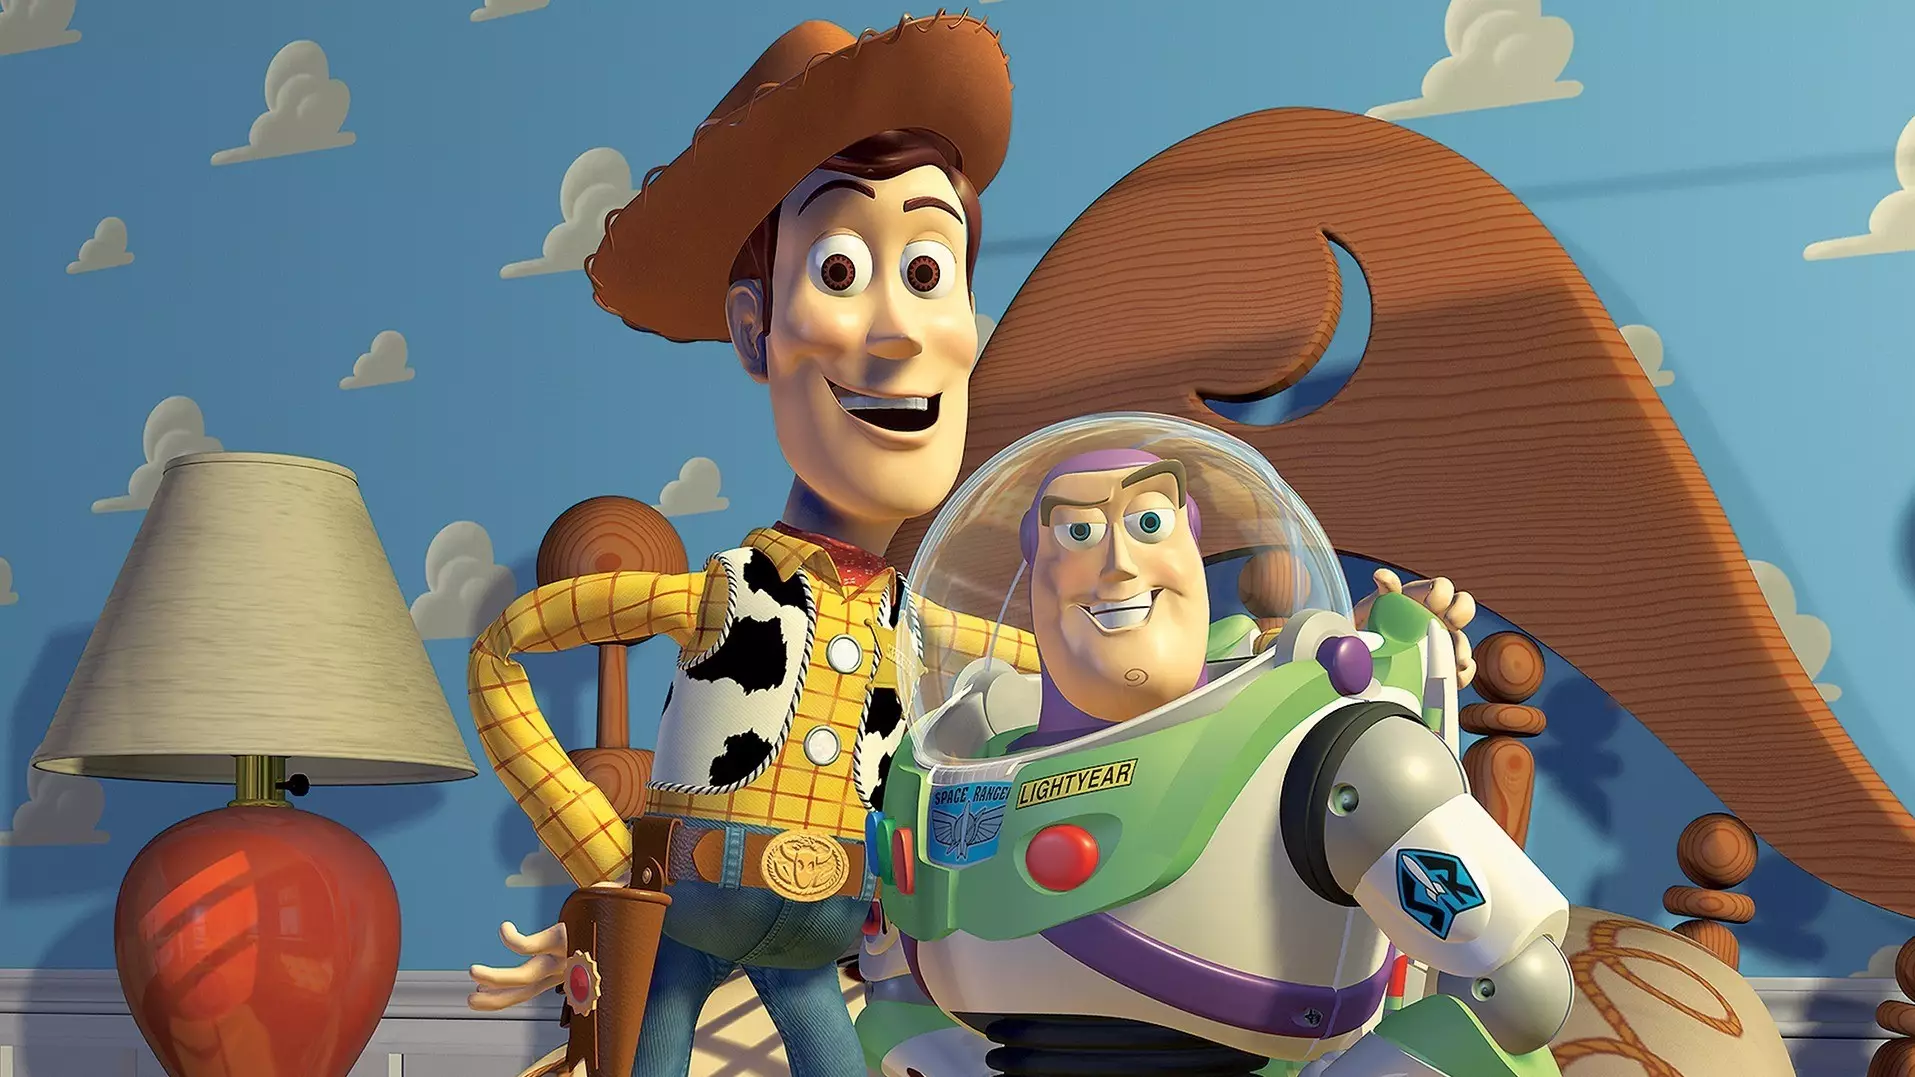 'Toy Story' Voted Best Pixar Movie By Internet